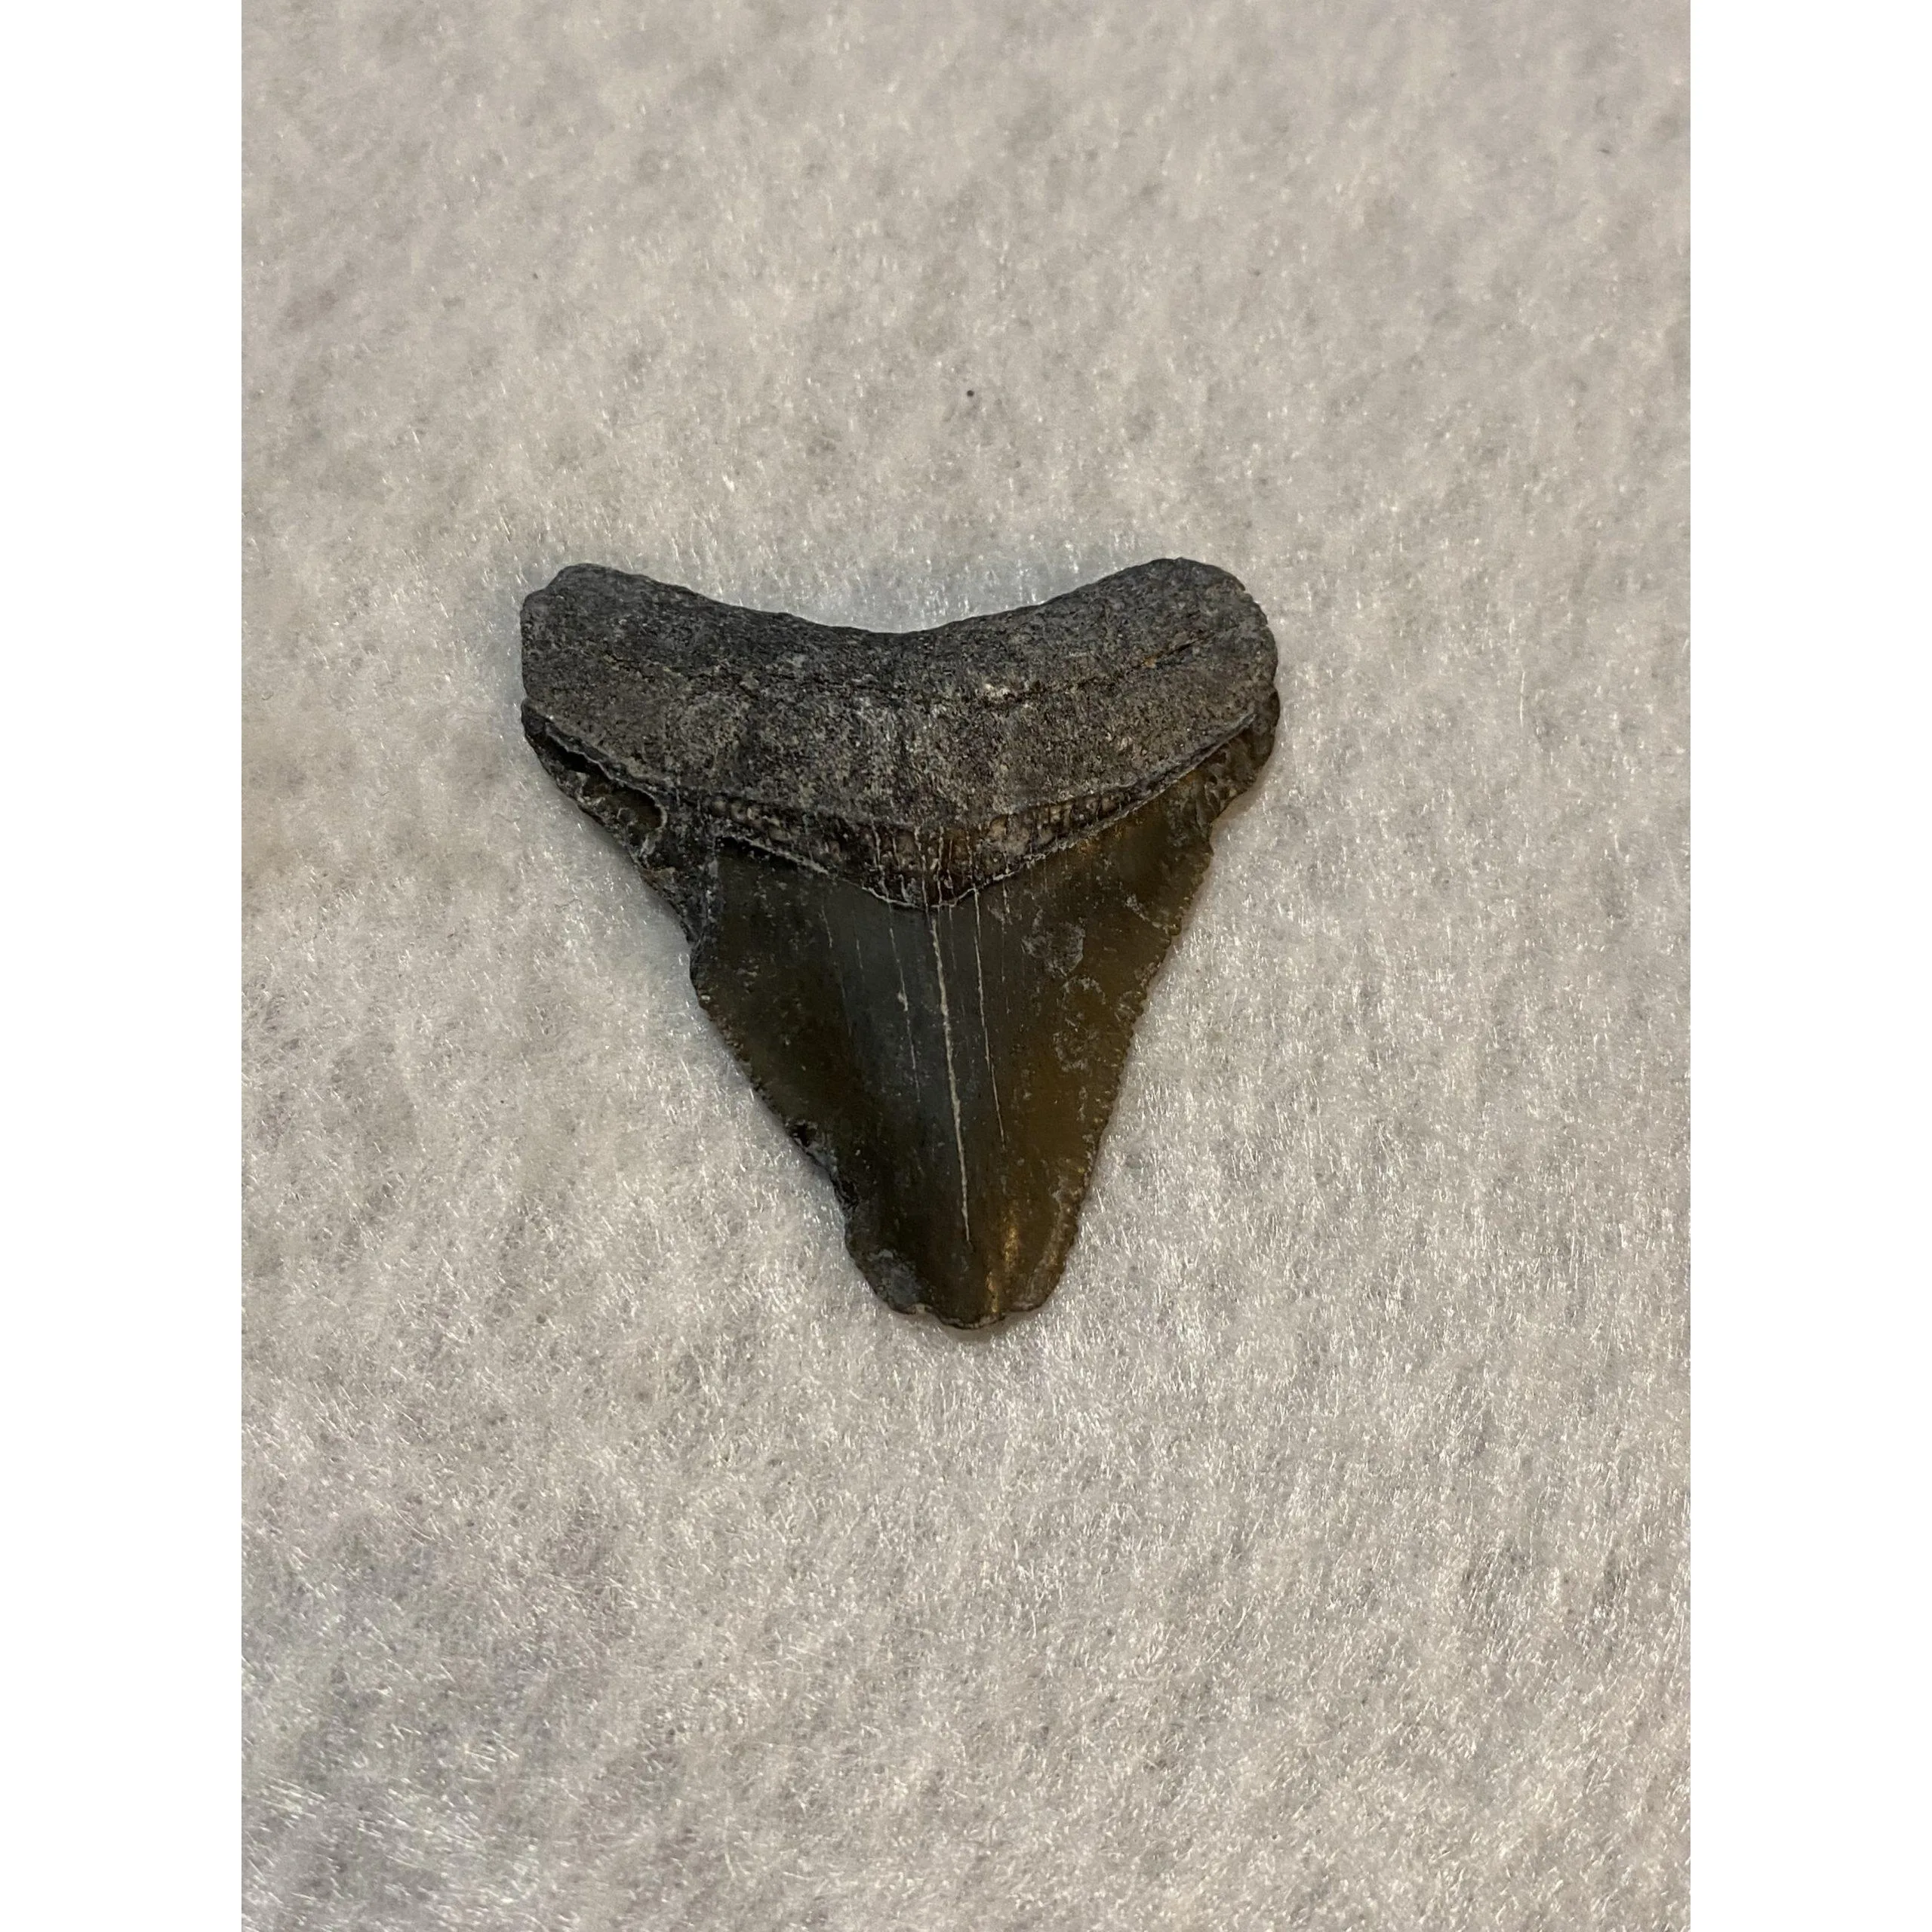 Megalodon Tooth  Bone Valley, Florida 2.15 inch Prehistoric Online